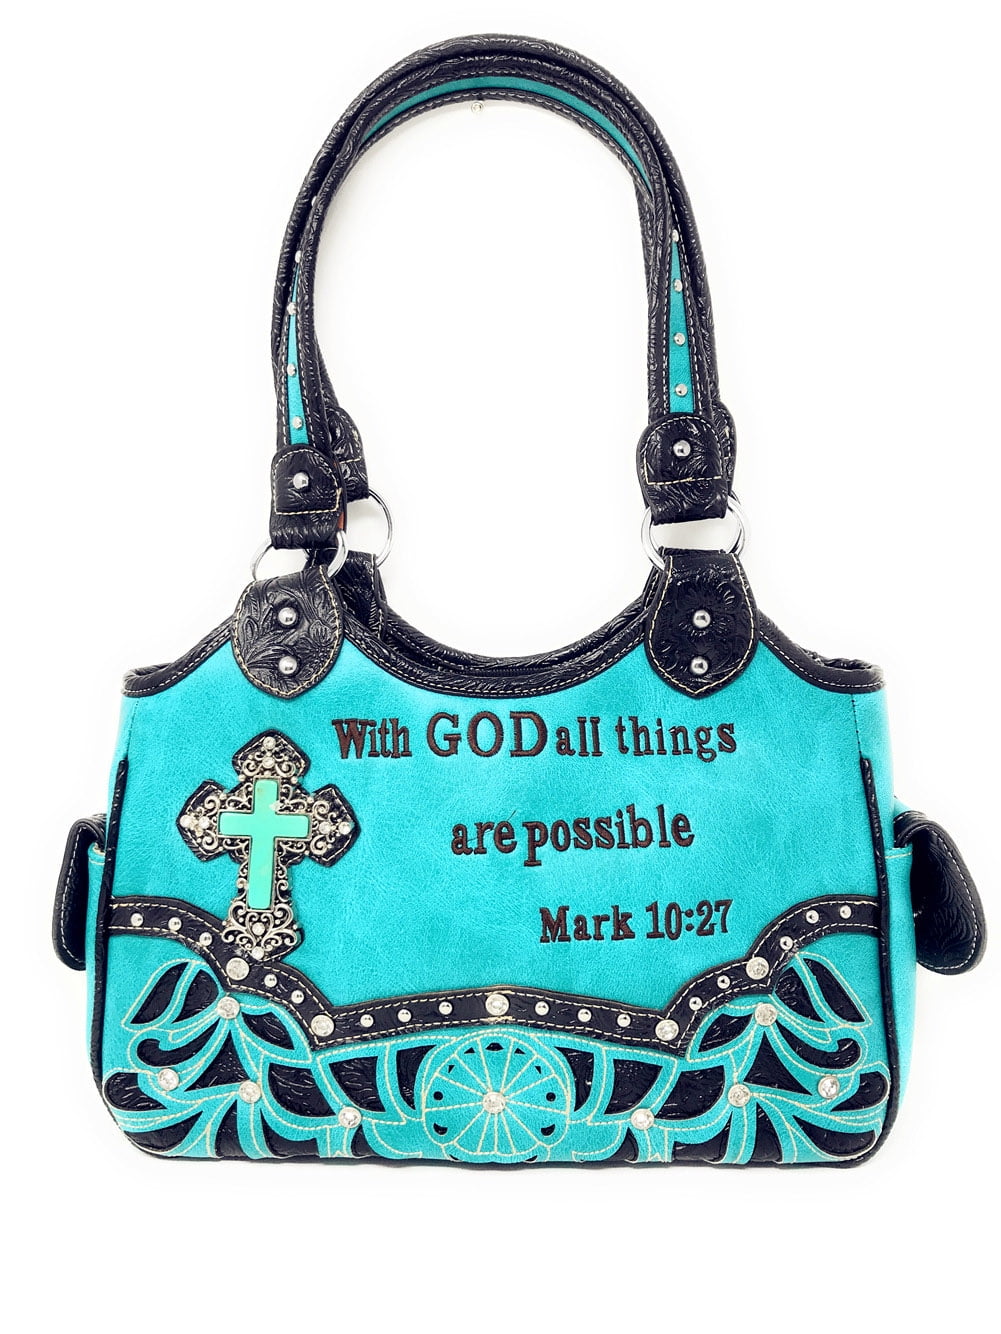 Texas West Bible Verse Rhinestone Cross Flora Cowgirl Women s Handbag in 6 Colors e7844e17 9b02 4e2d bae8 c13c427a5c84 1.655c6f55bd259370a94cc095f93fa83c